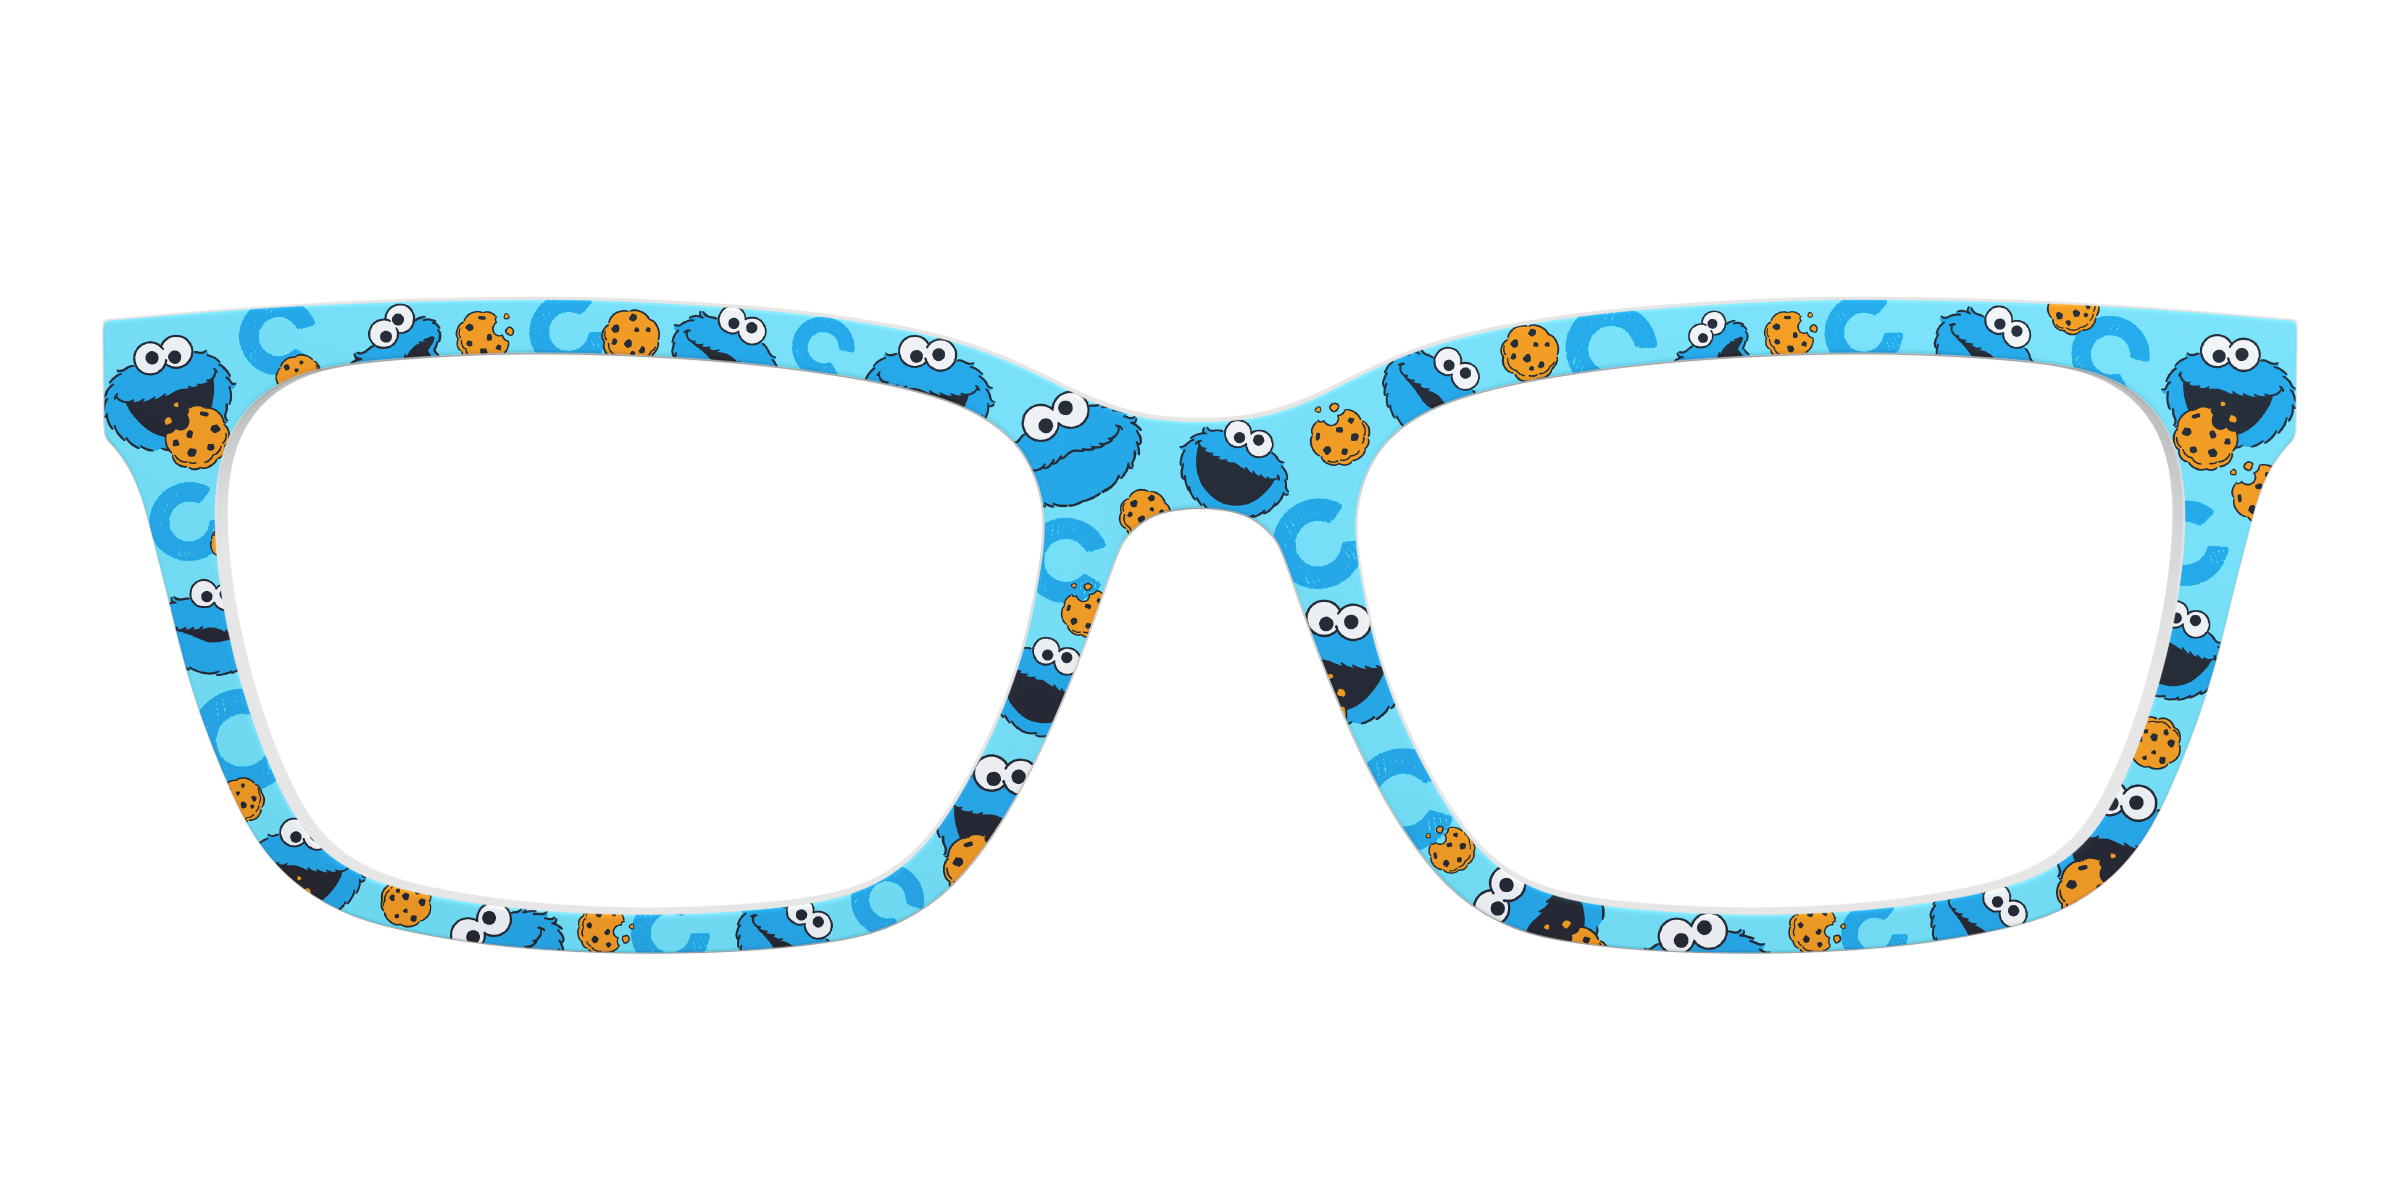 Glasses Online, Eyewear for Everyone™